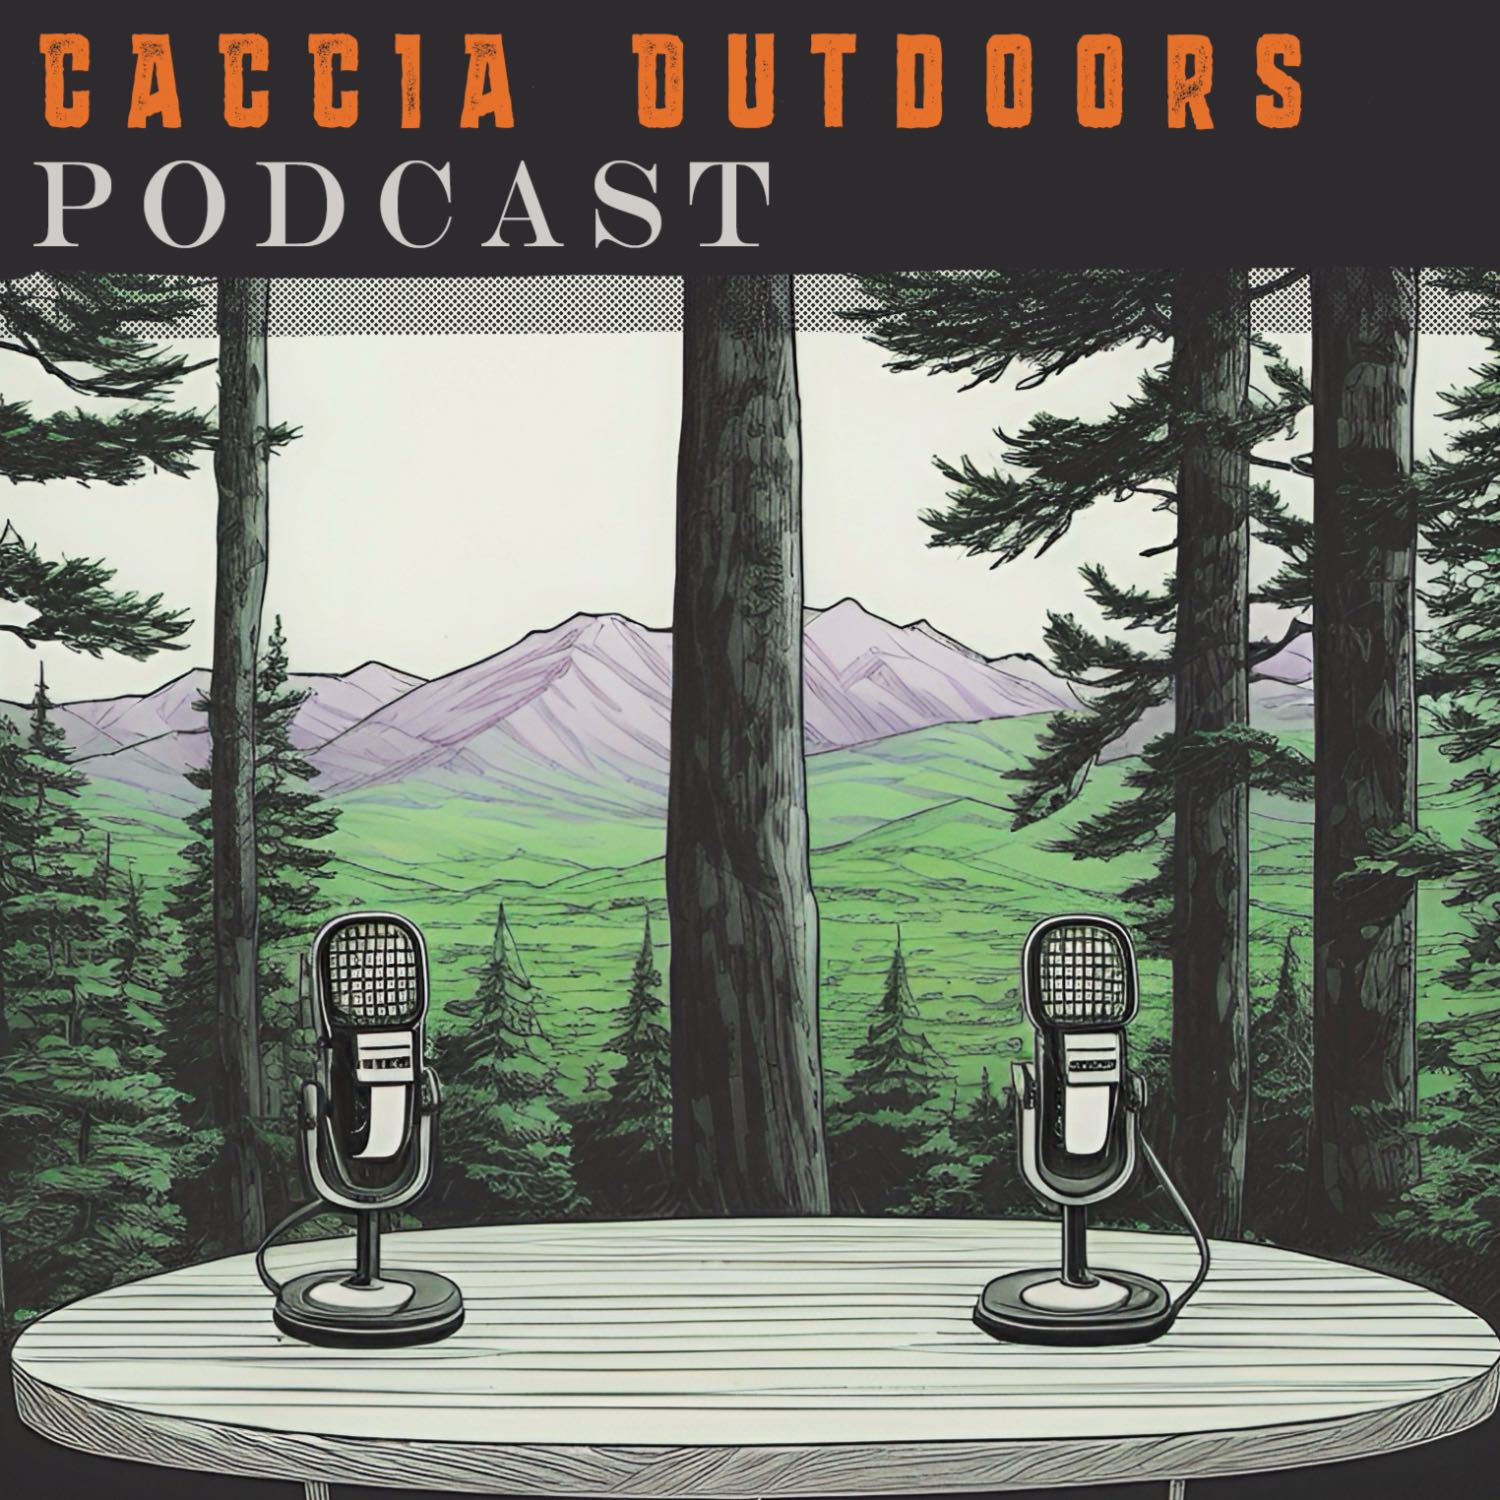 CACCIA Outdoors Podcast